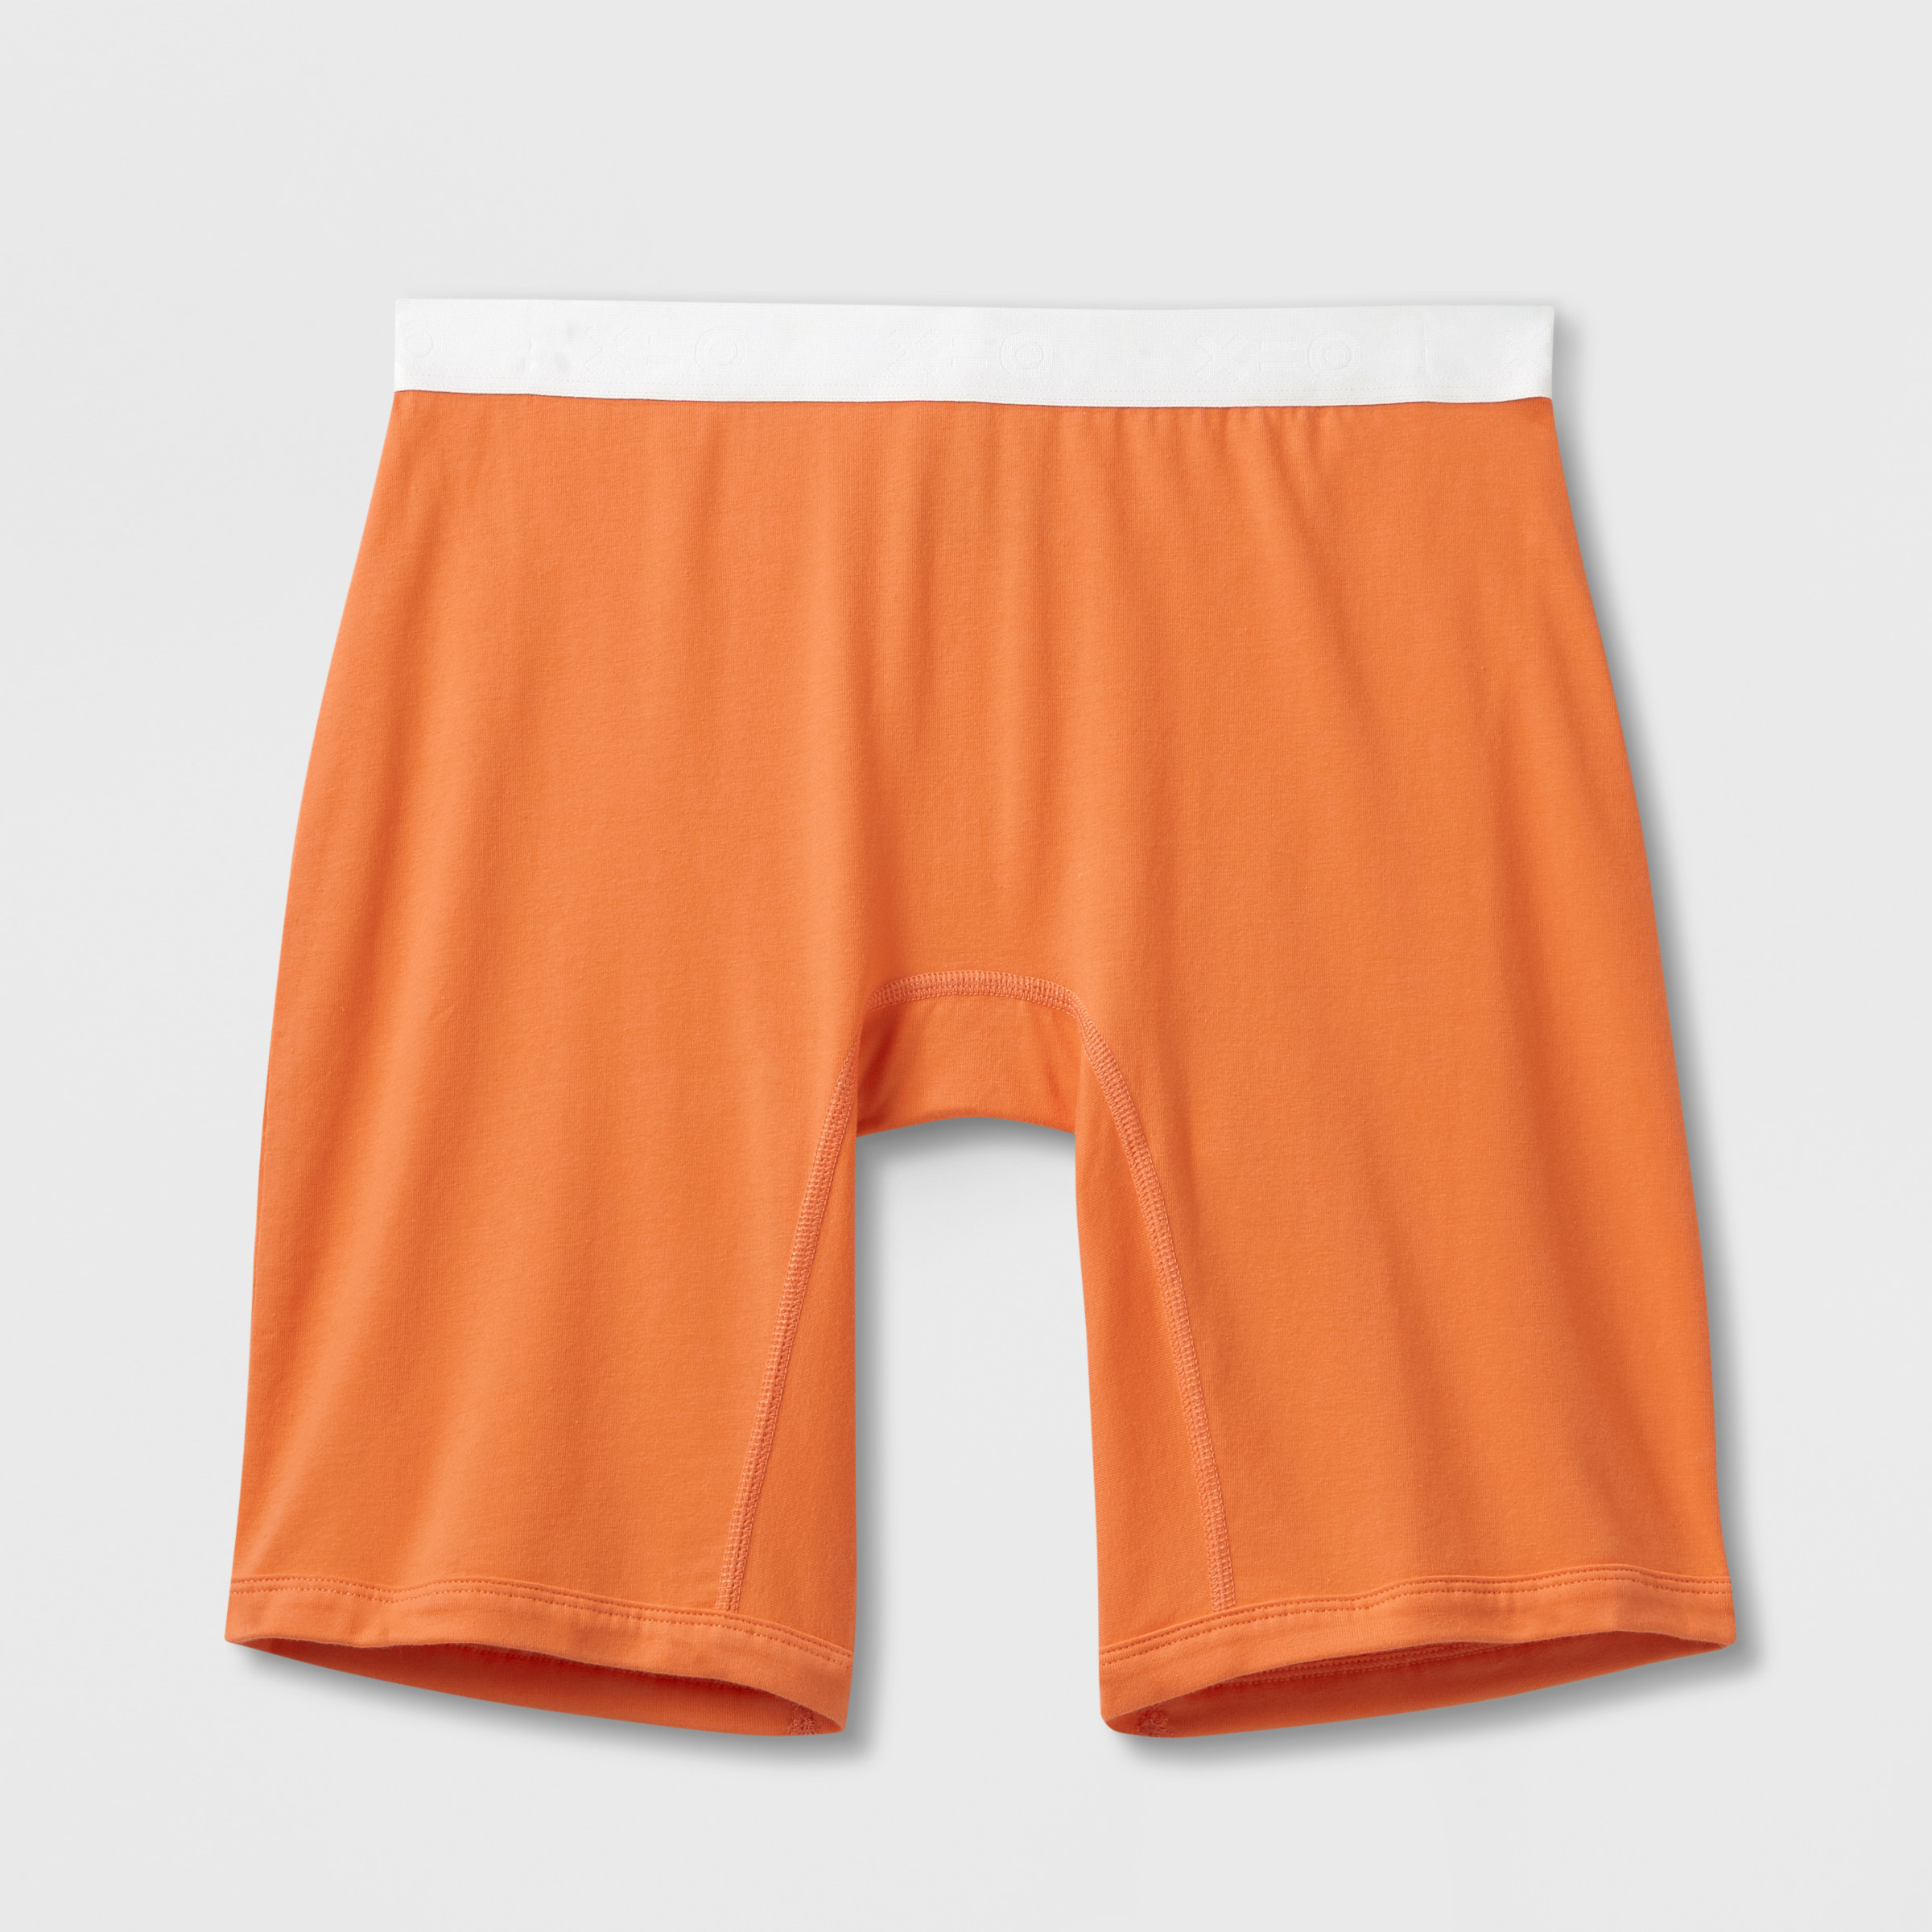 TomboyX Boxers in orange